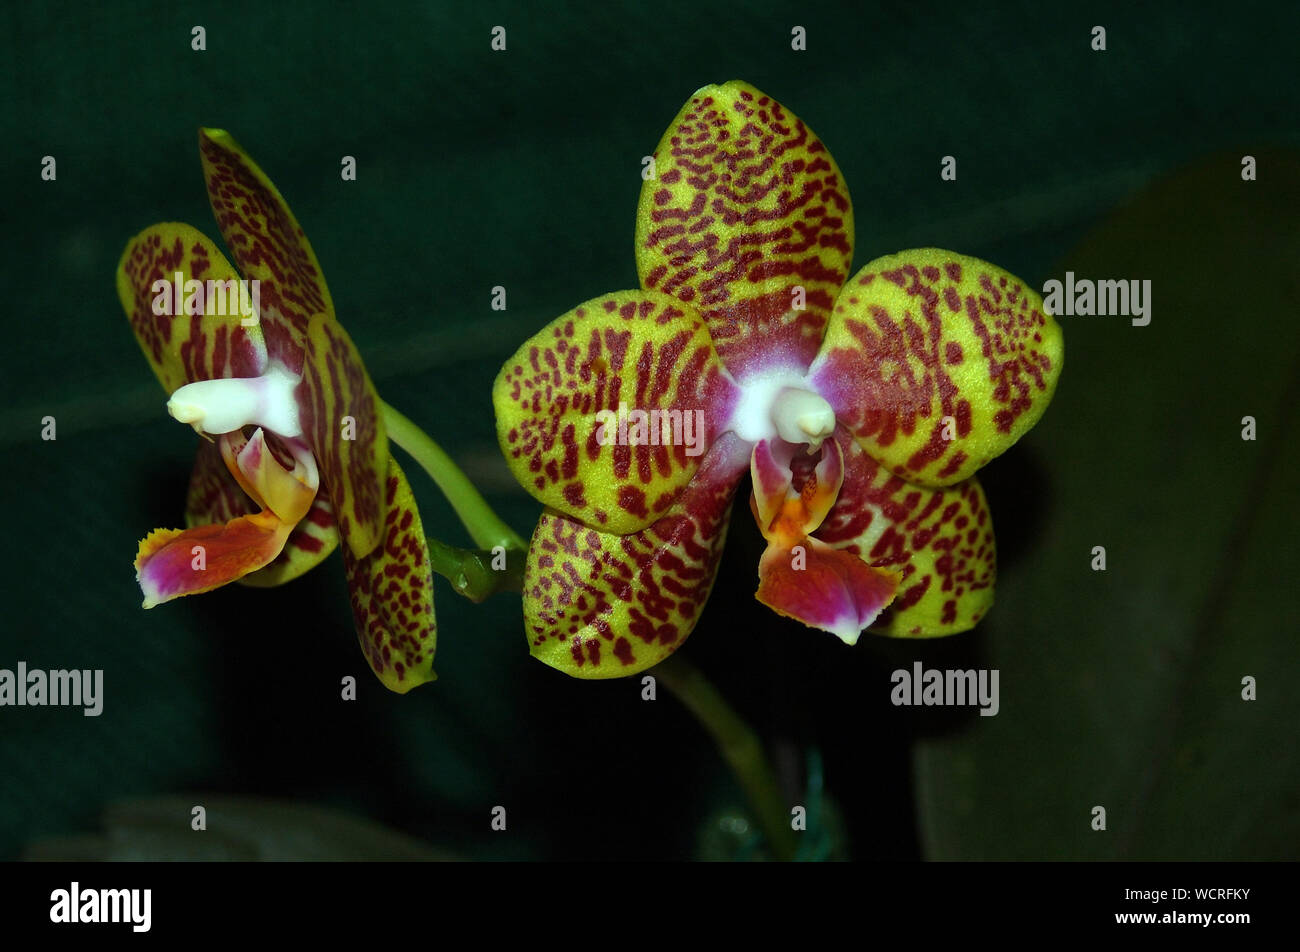 Phaleonopsis orchid hybrid - golden peoker x venosa on black background Stock Photo